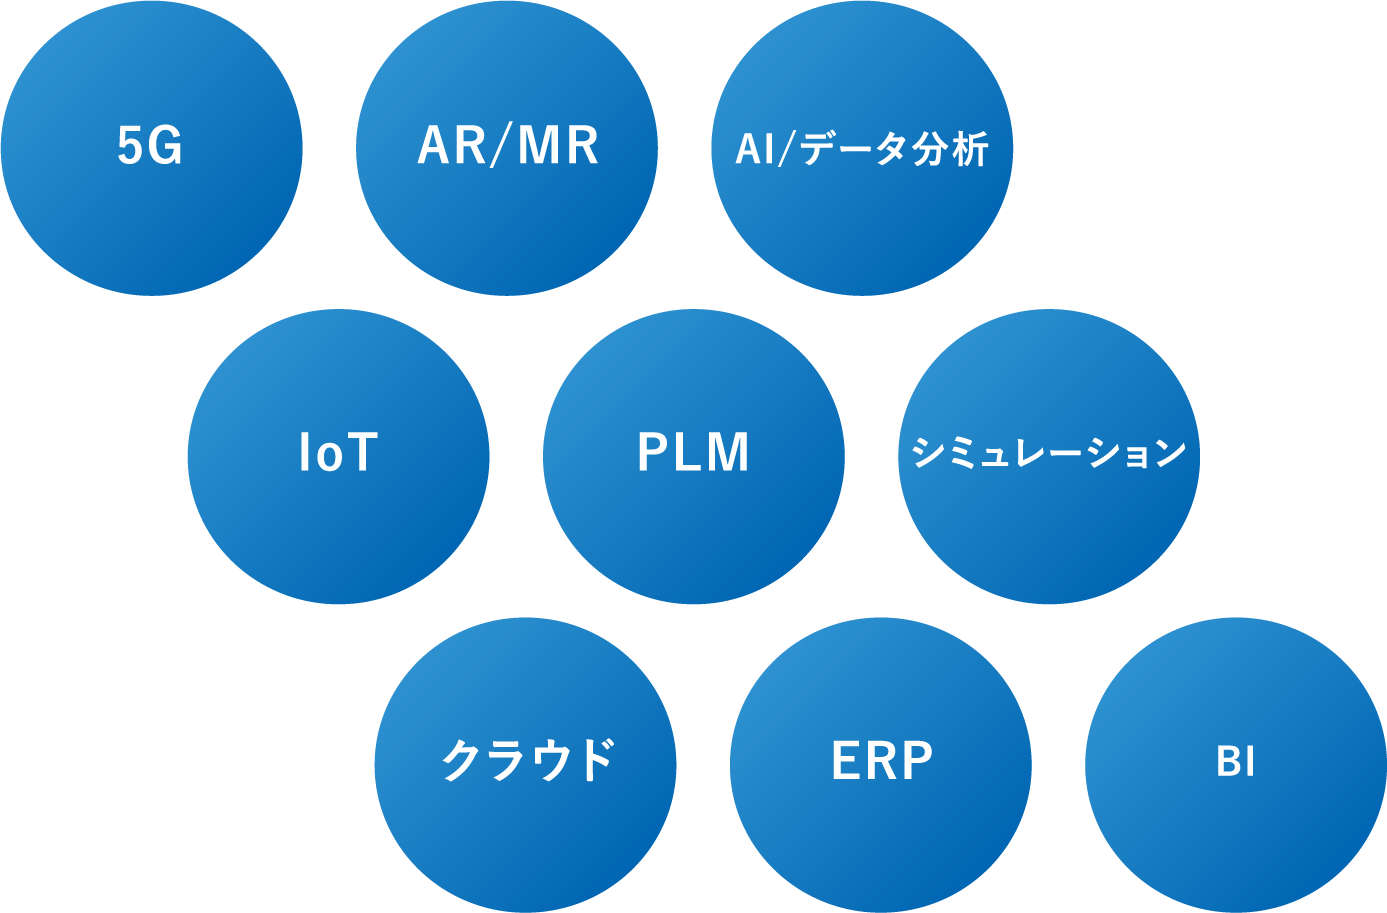 5G AR/MR AI/データ分析 IoT PLM シミュレーション クラウド ERP BI